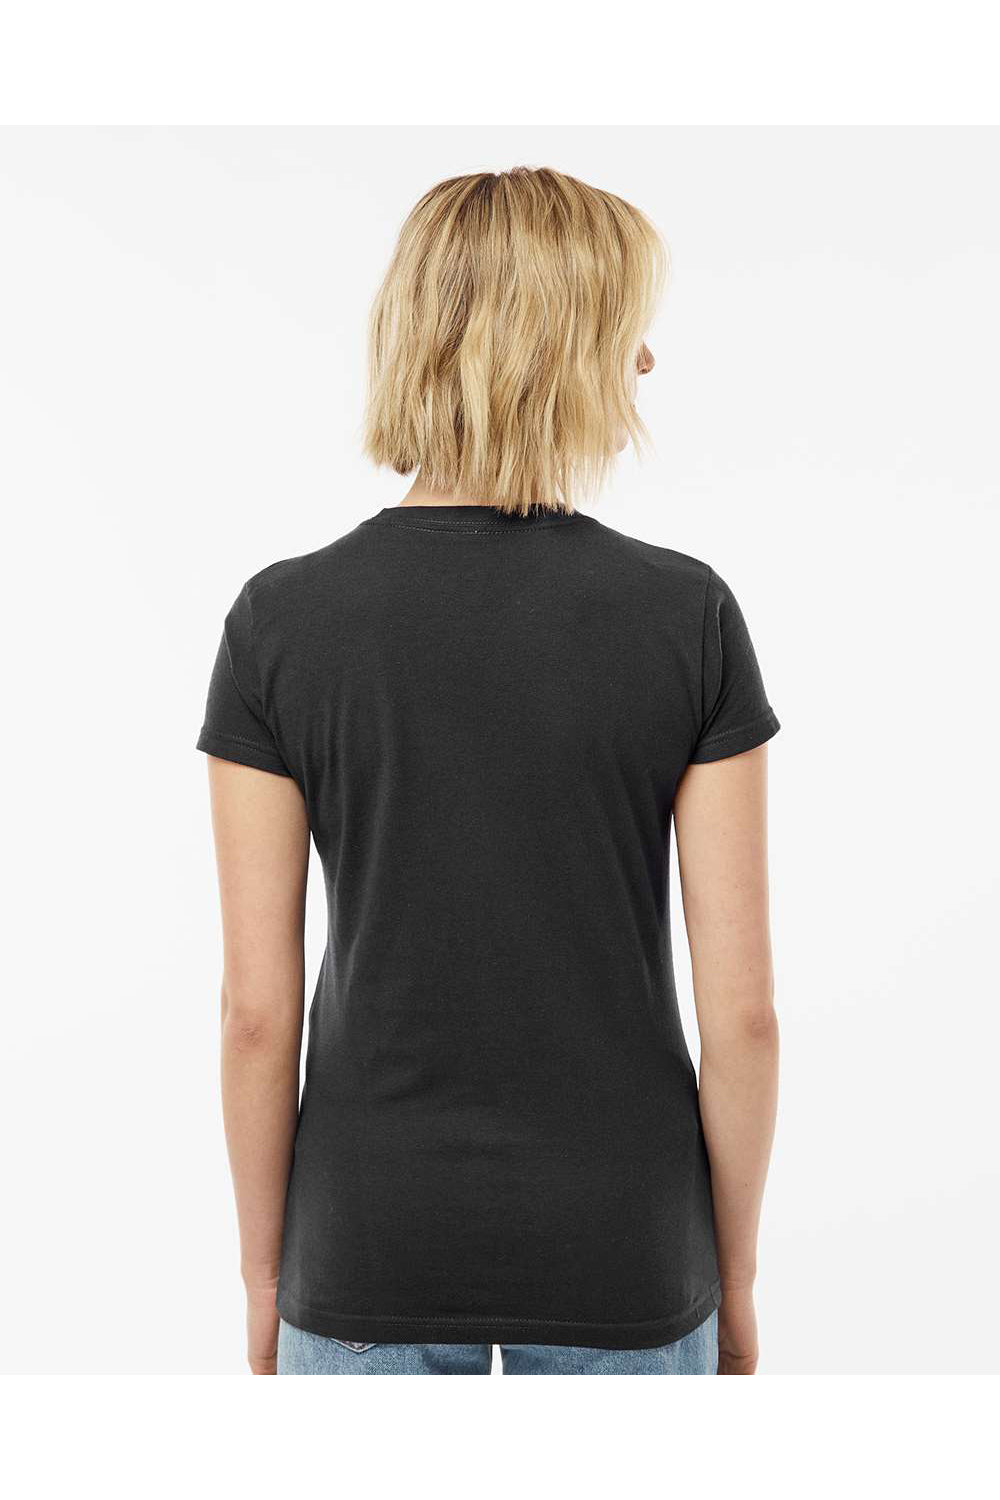 Tultex 213 Womens Fine Jersey Slim Fit Short Sleeve Crewneck T-Shirt Coal Grey Model Back